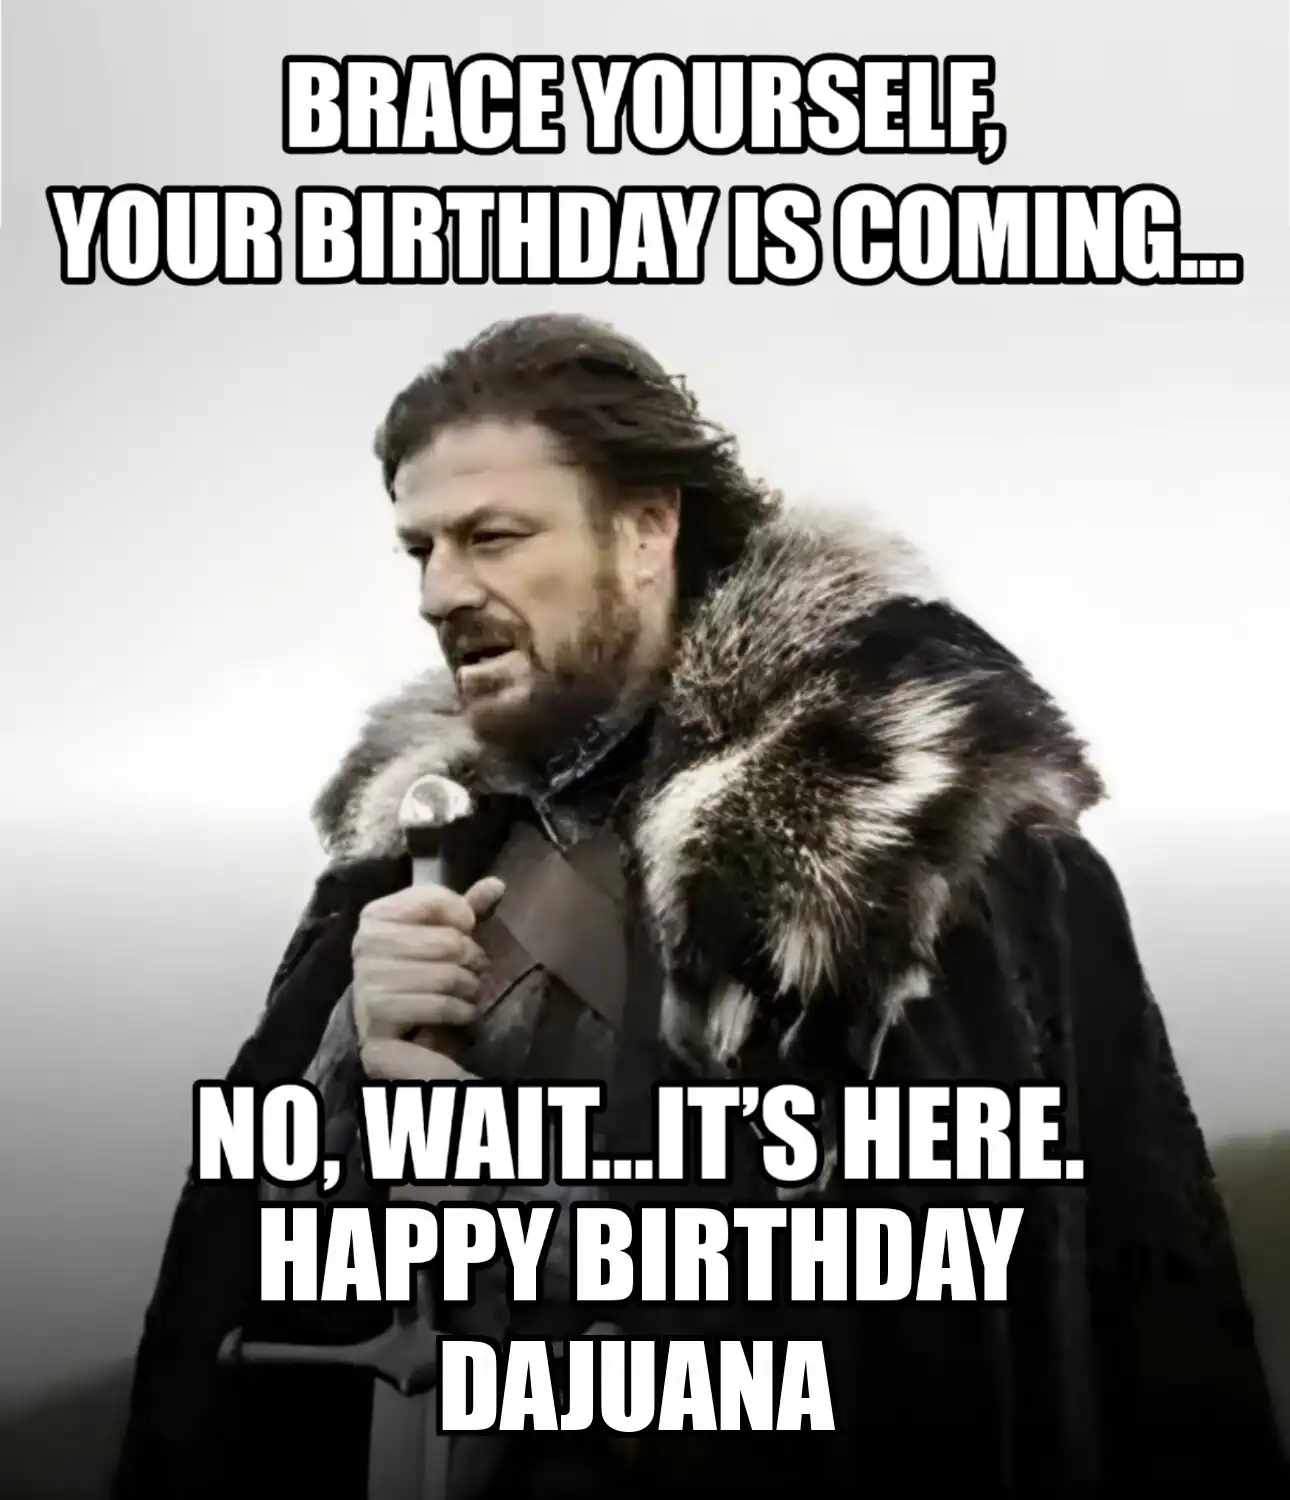 Happy Birthday Dajuana Brace Yourself Your Birthday Is Coming Meme